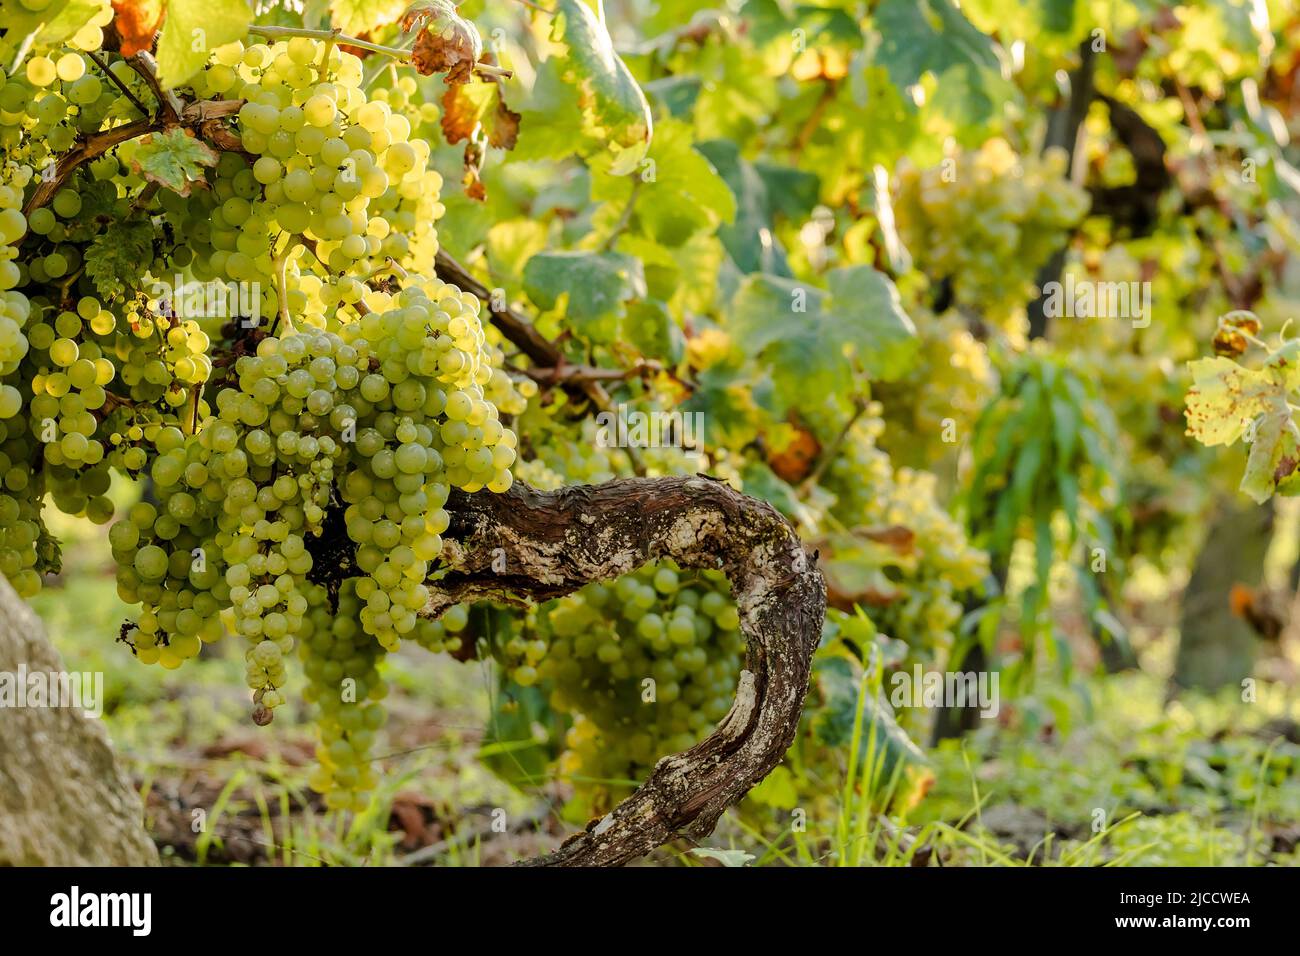 Vitis vinifera grape vine ripe green fruits Stock Photo